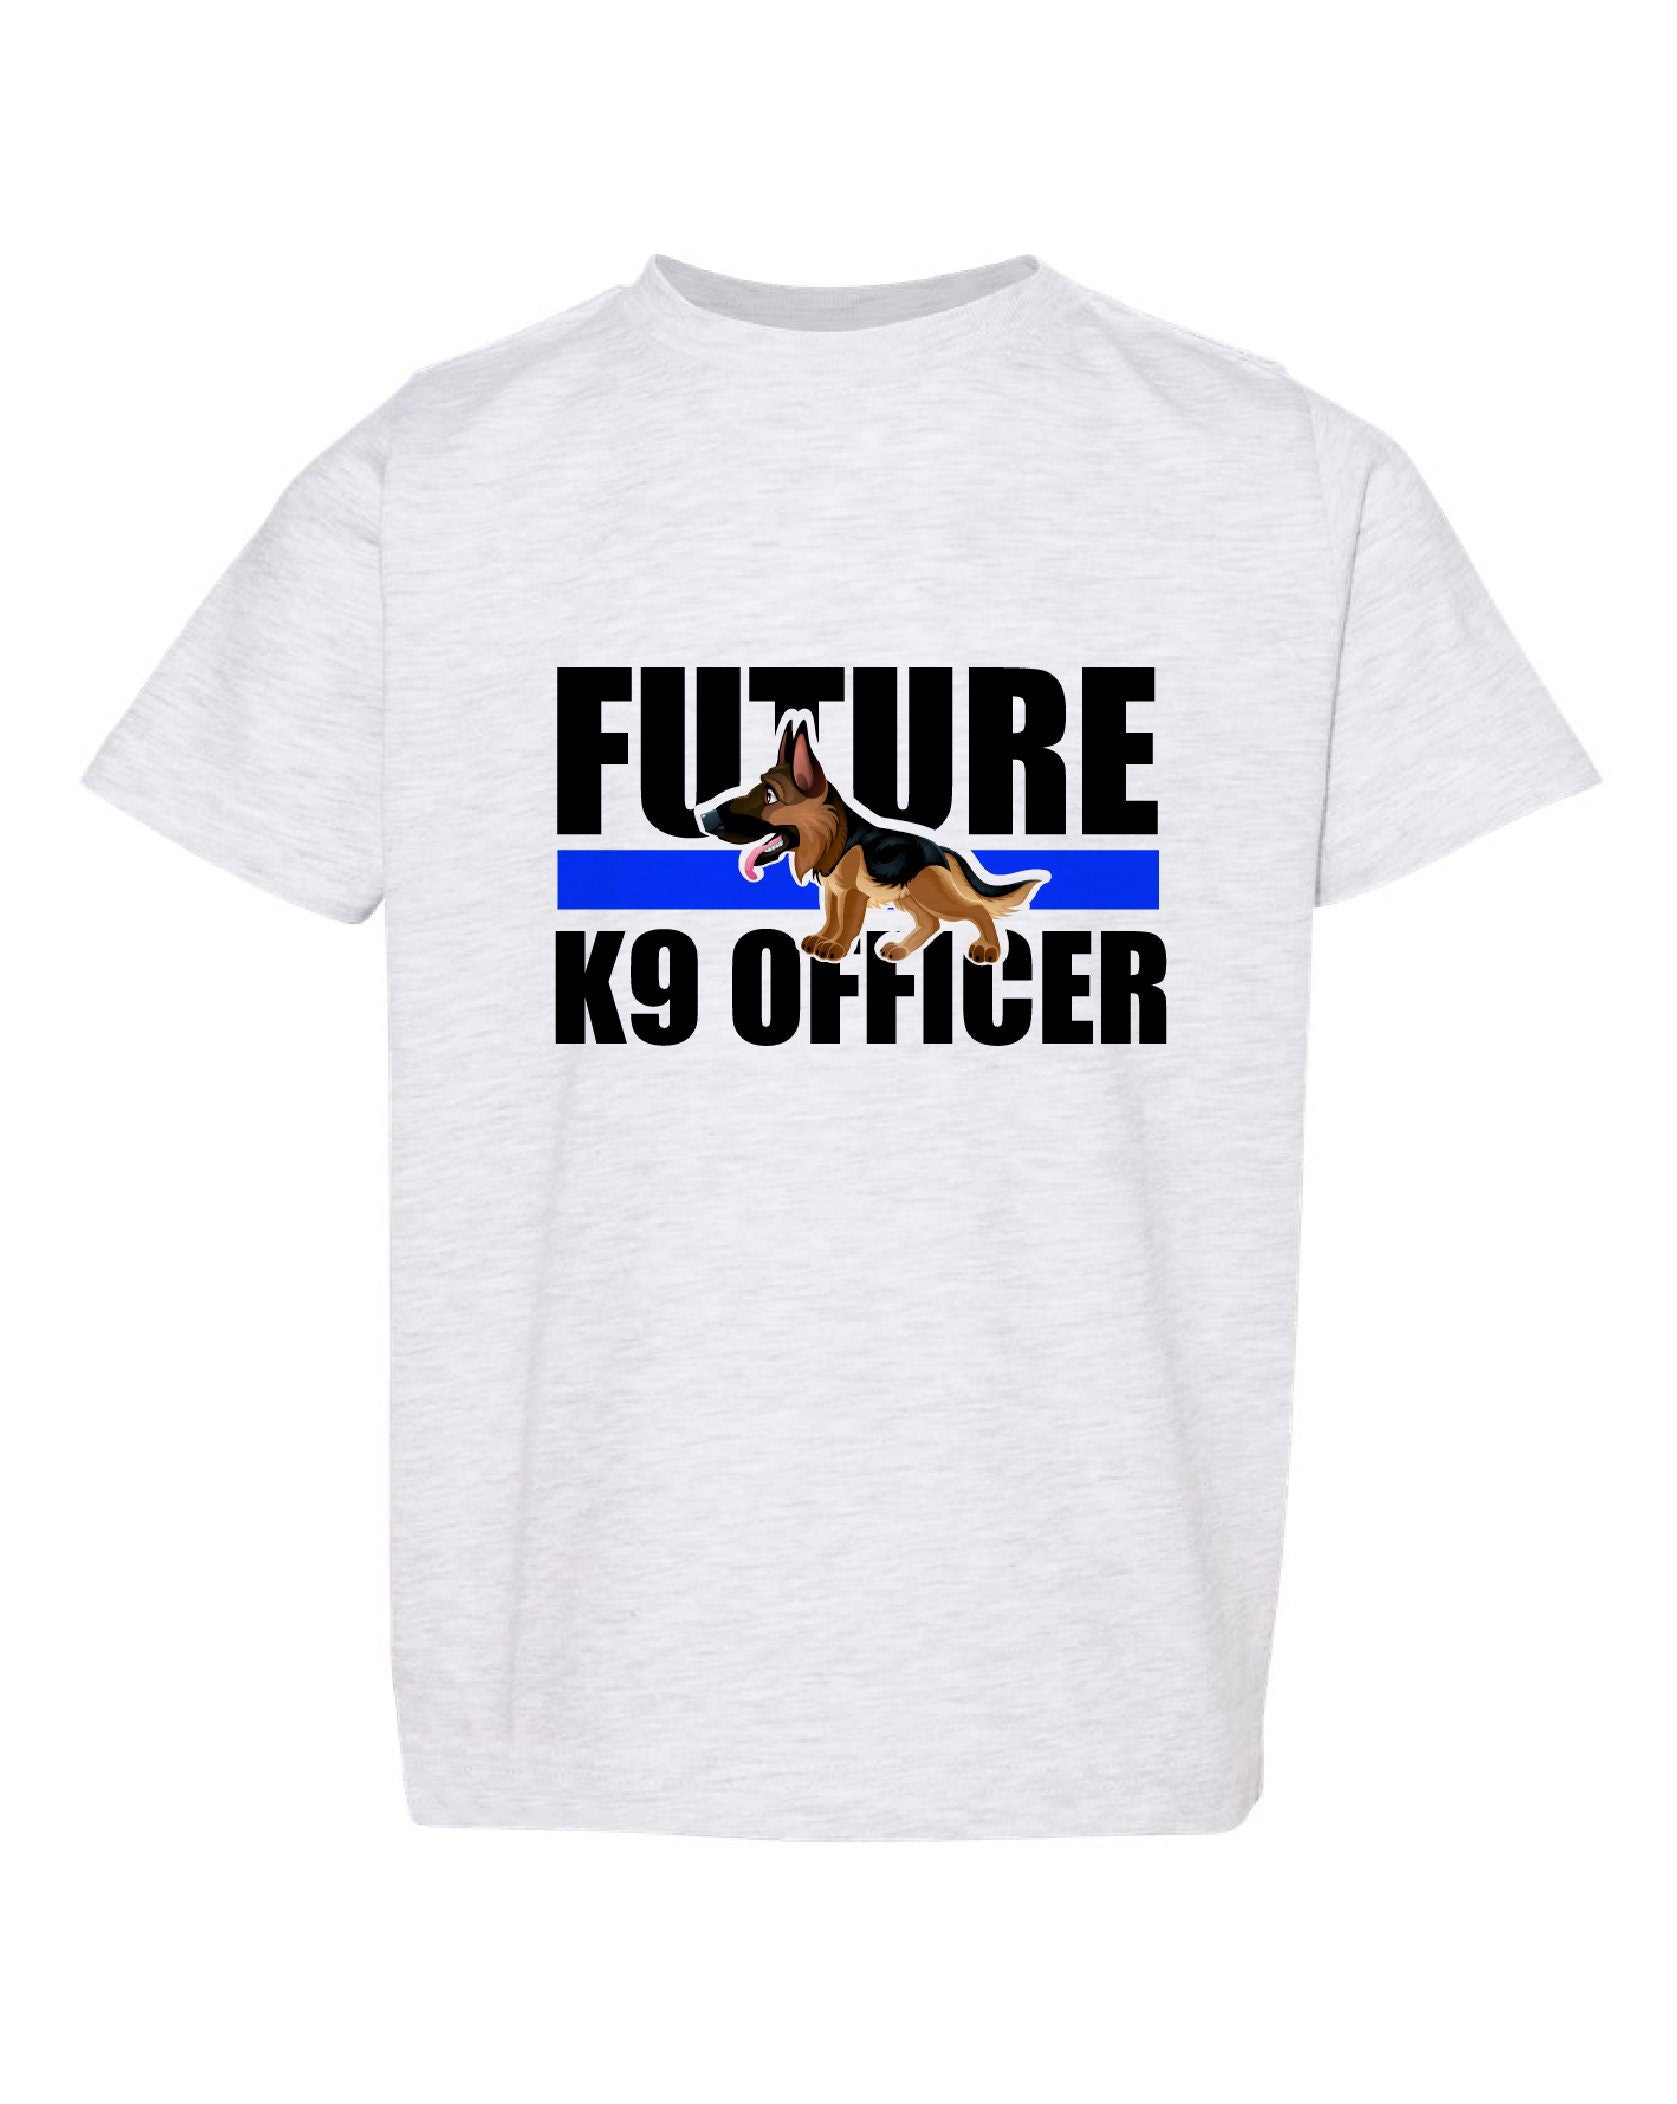 Future K9 Officer, Kid's K9 T-Shirt, Police K9 T-Shirt